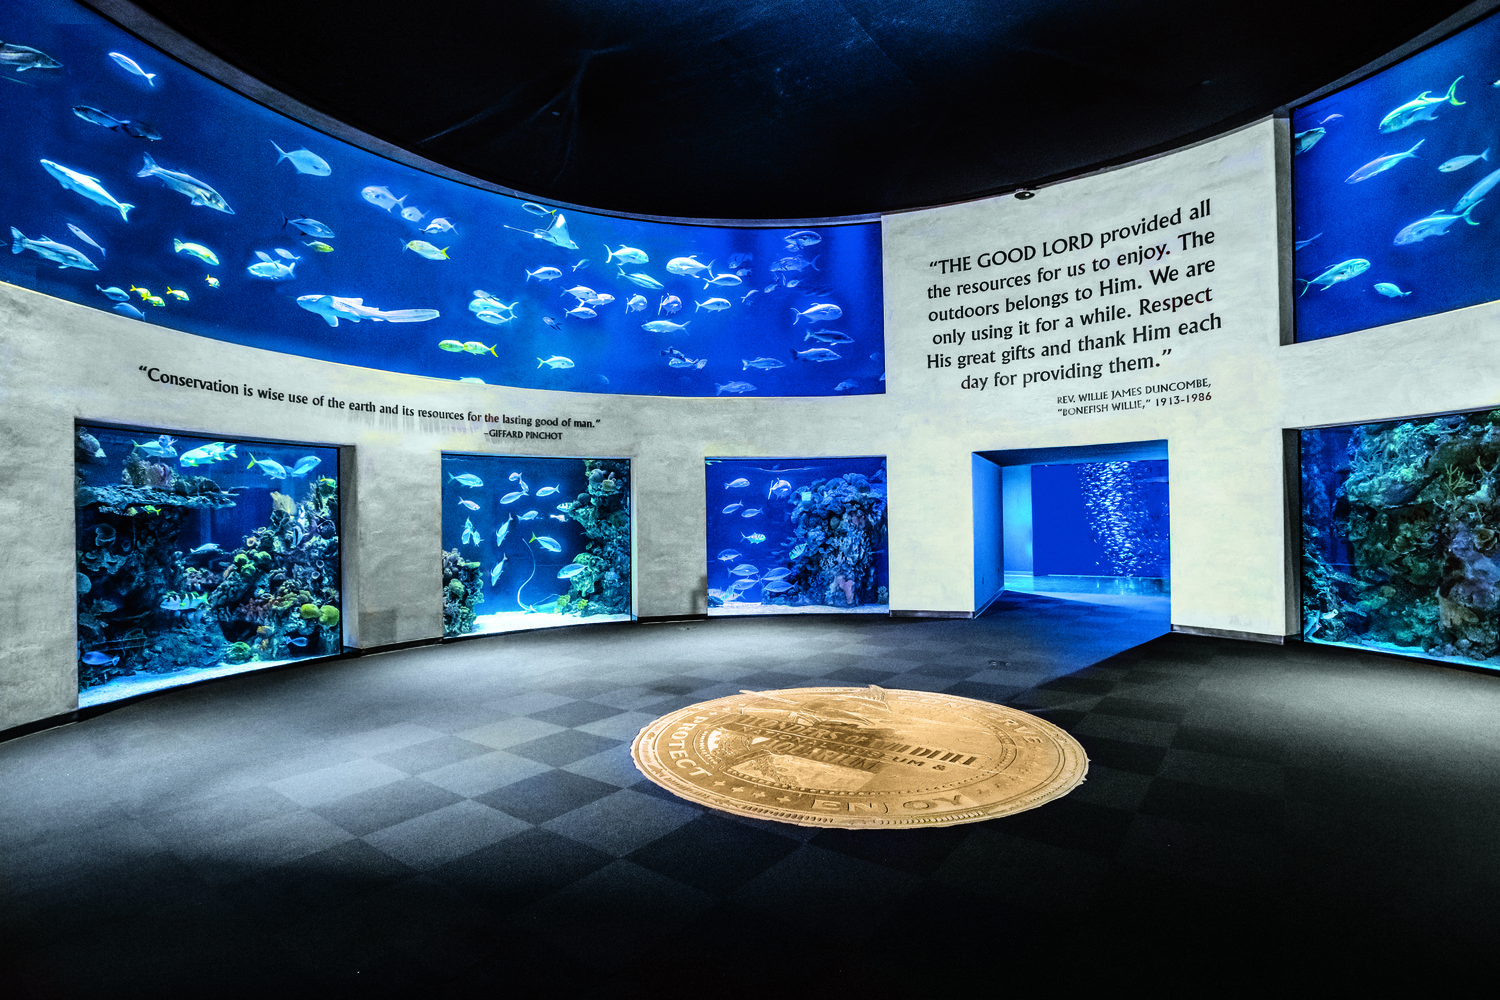 The Springfield aquarium is home to 1.5 million gallons displaying aquatic wildlife.